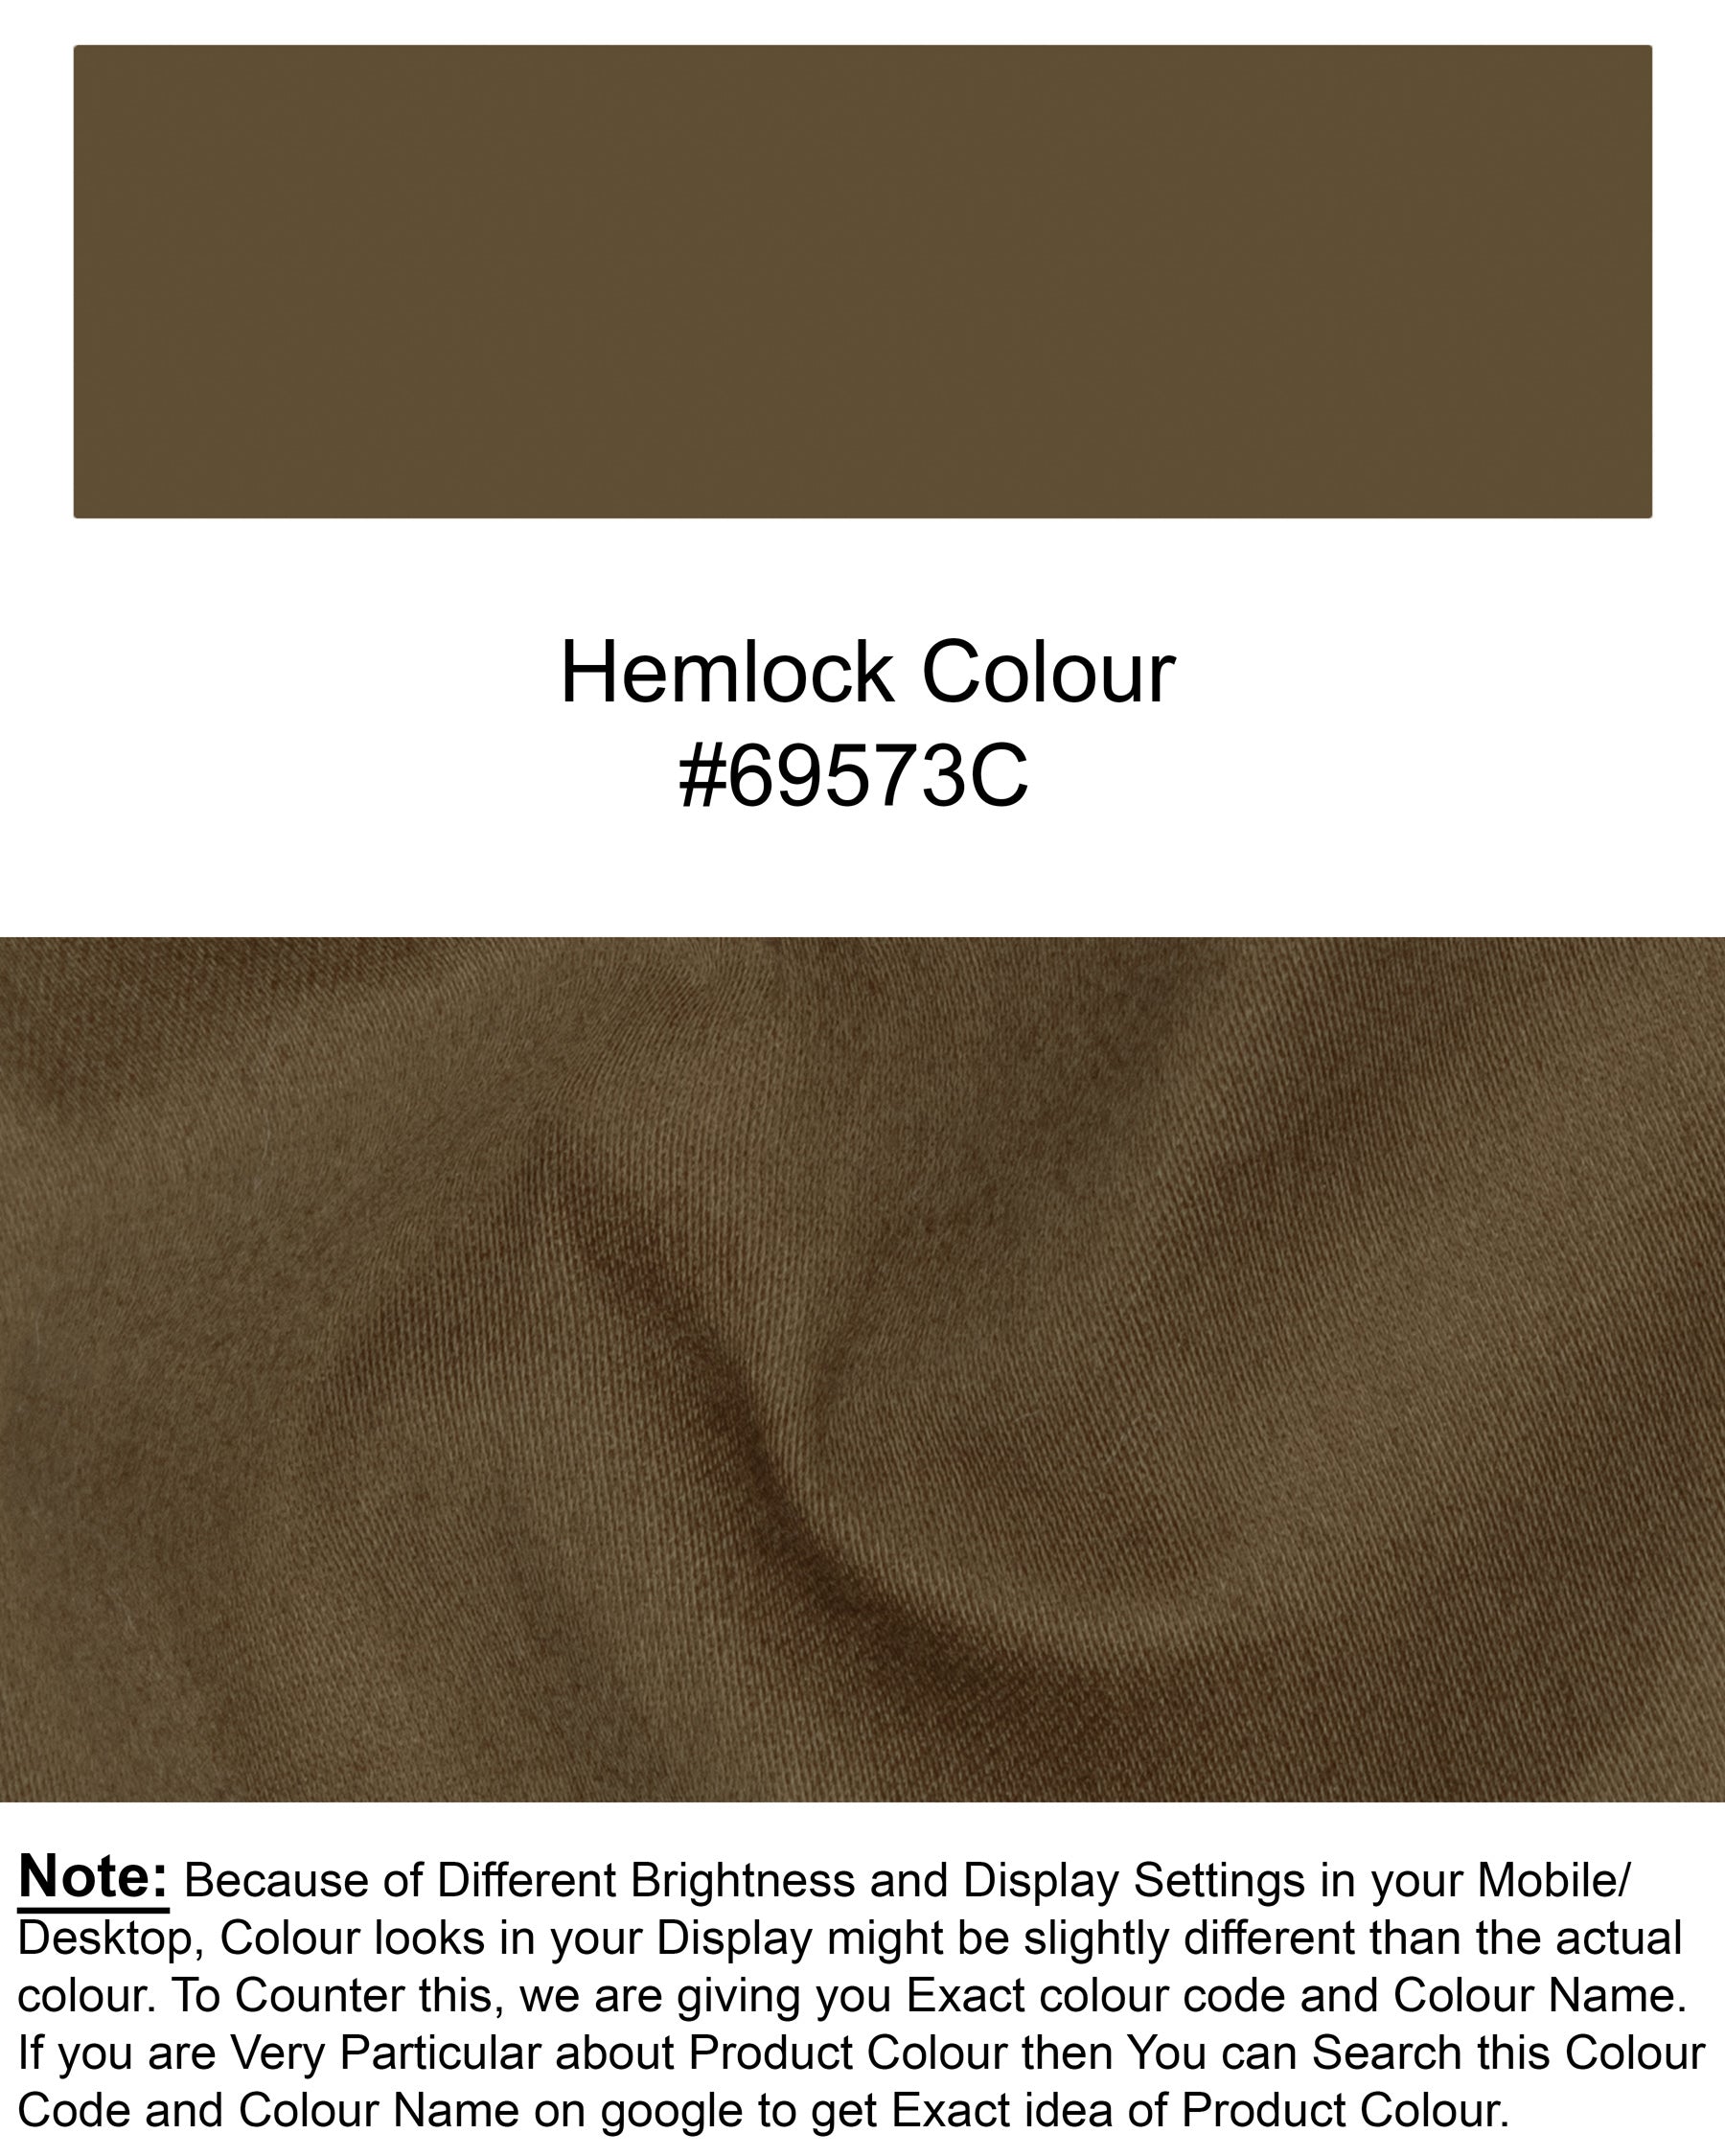 Hemlock Brown DouSTe Breasted Premium Cotton Suit ST1256-DB-42, ST1256-DB-44, ST1256-DB-46, ST1256-DB-48, ST1256-DB-50, ST1256-DB-52, ST1256-DB-54, ST1256-DB-56, ST1256-DB-36, ST1256-DB-38, ST1256-DB-40, ST1256-DB-58, ST1256-DB-60